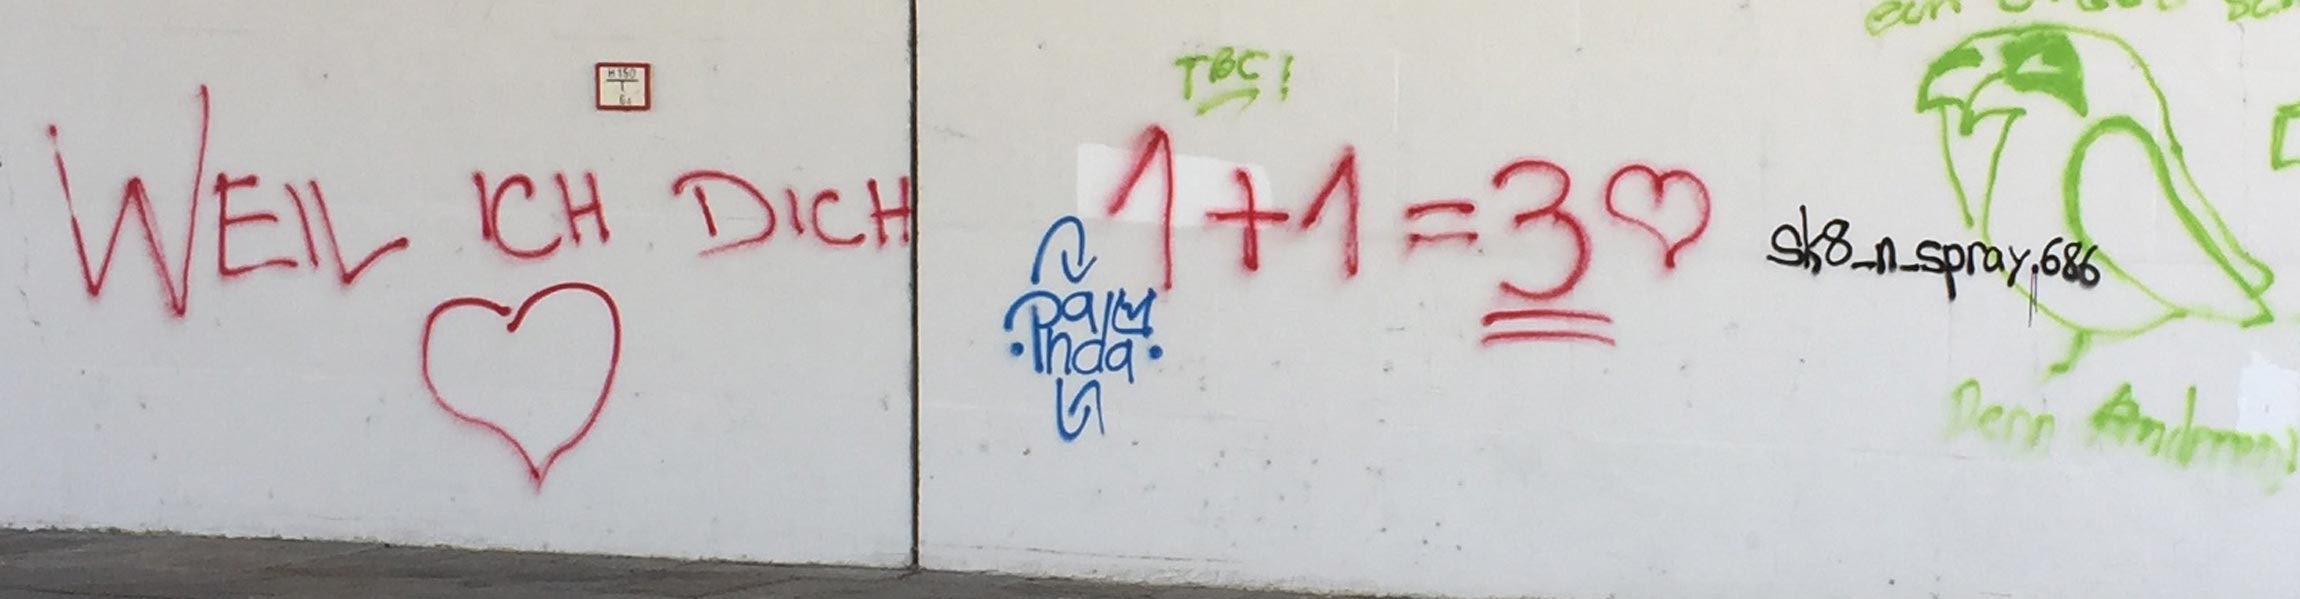 Graffitti 1+1=3